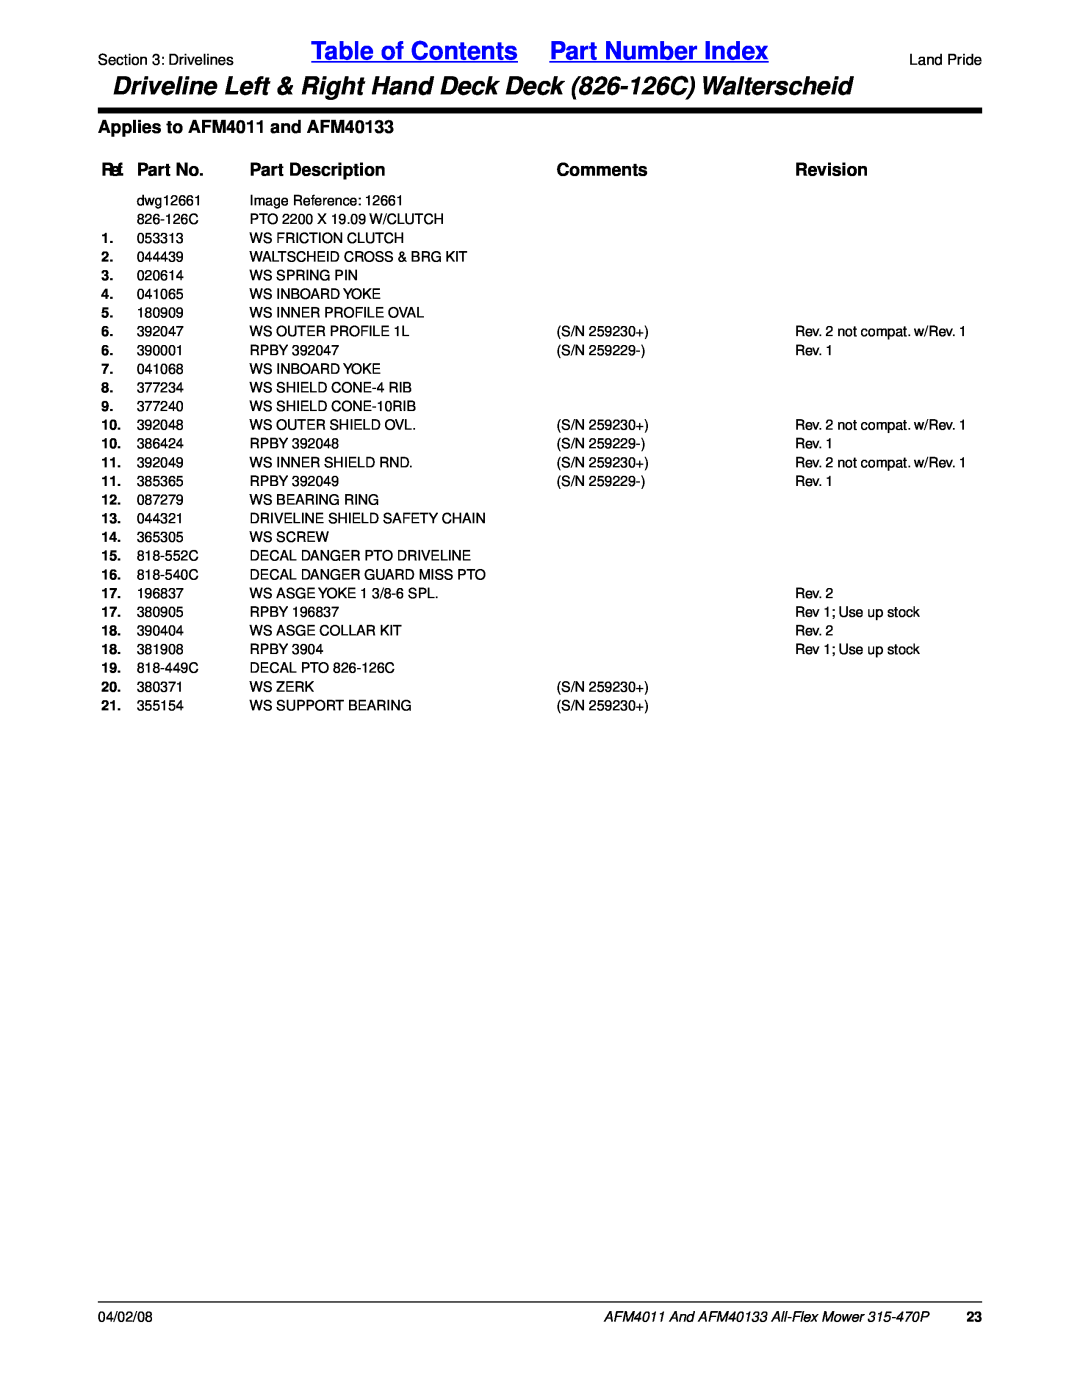 Land Pride manual Table of Contents Part Number Index, Applies to AFM4011 and AFM40133, Ref. Part No, Part Description 